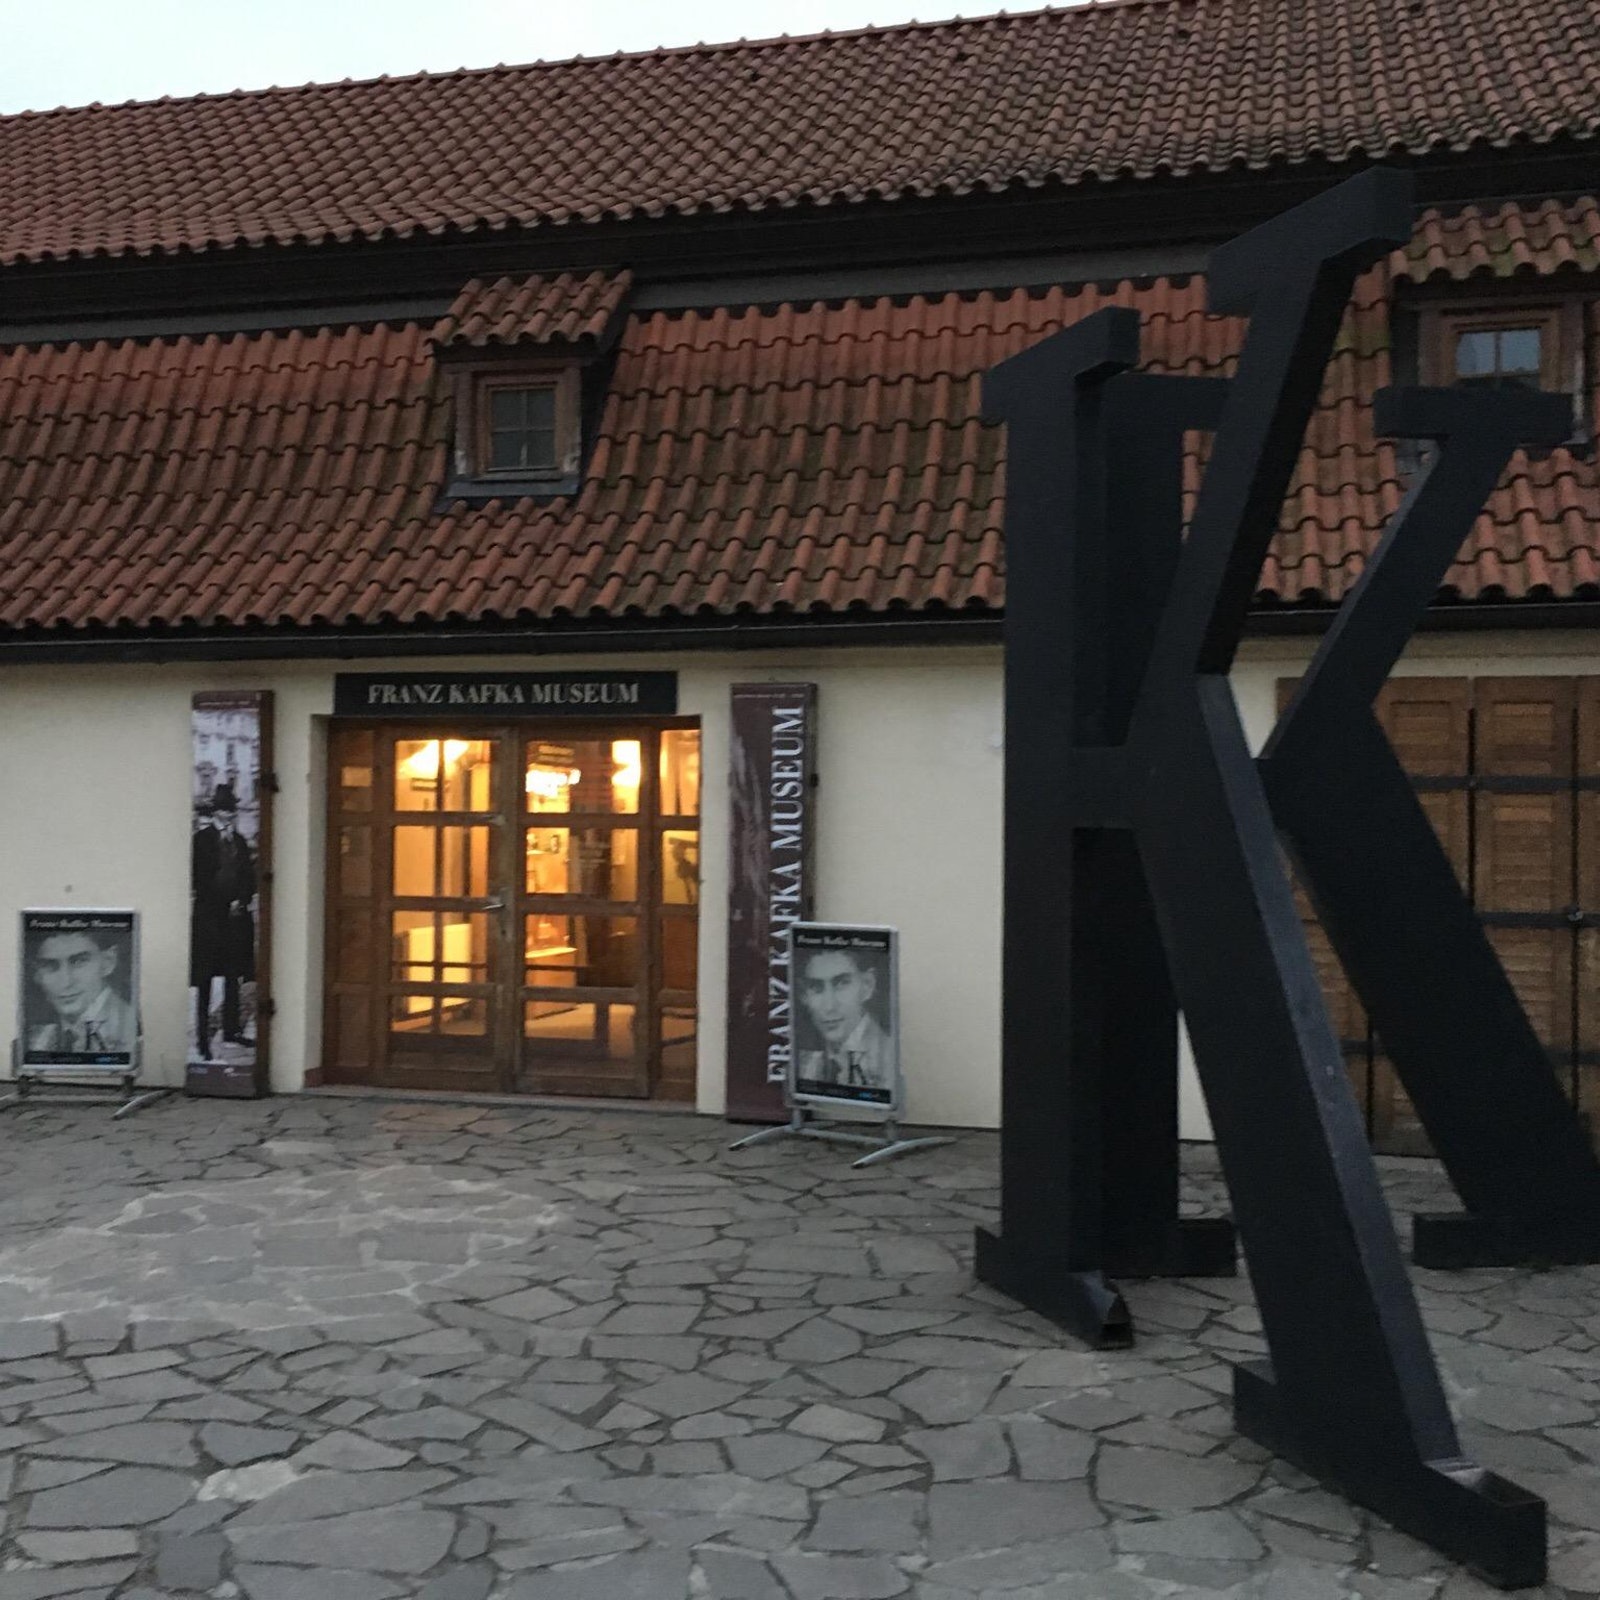 Franz Kafka Museum in Czech Republic